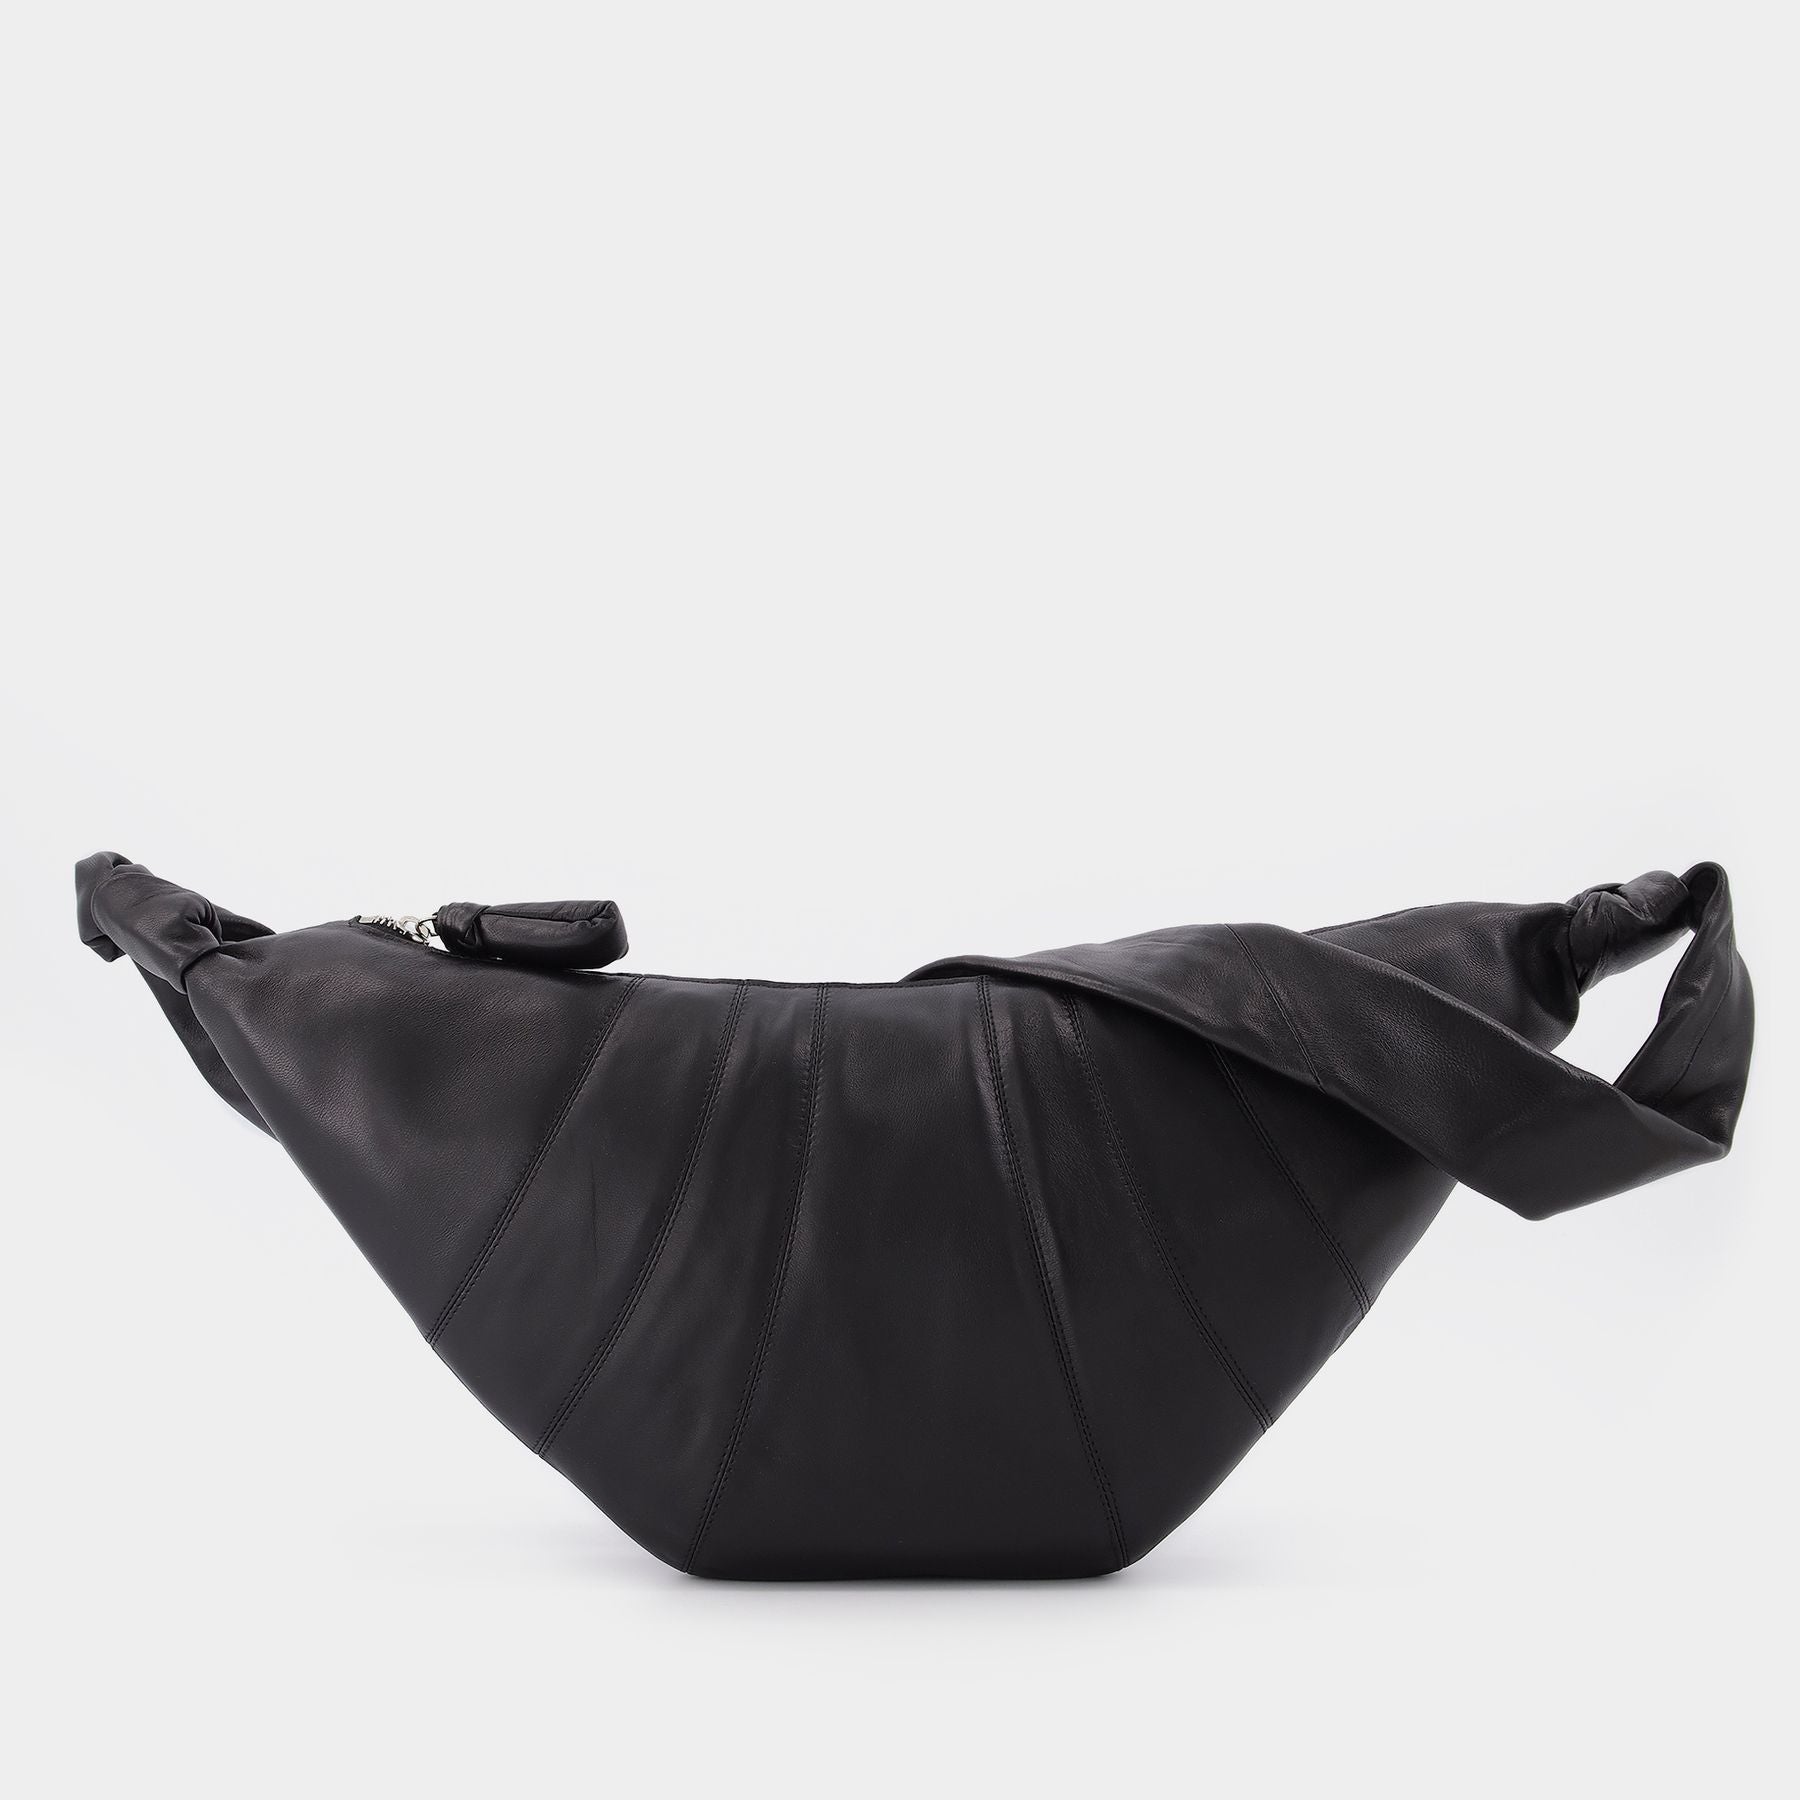 Lemaire - Lemaire Medium Croissant Bag in Black - Hampden Clothing